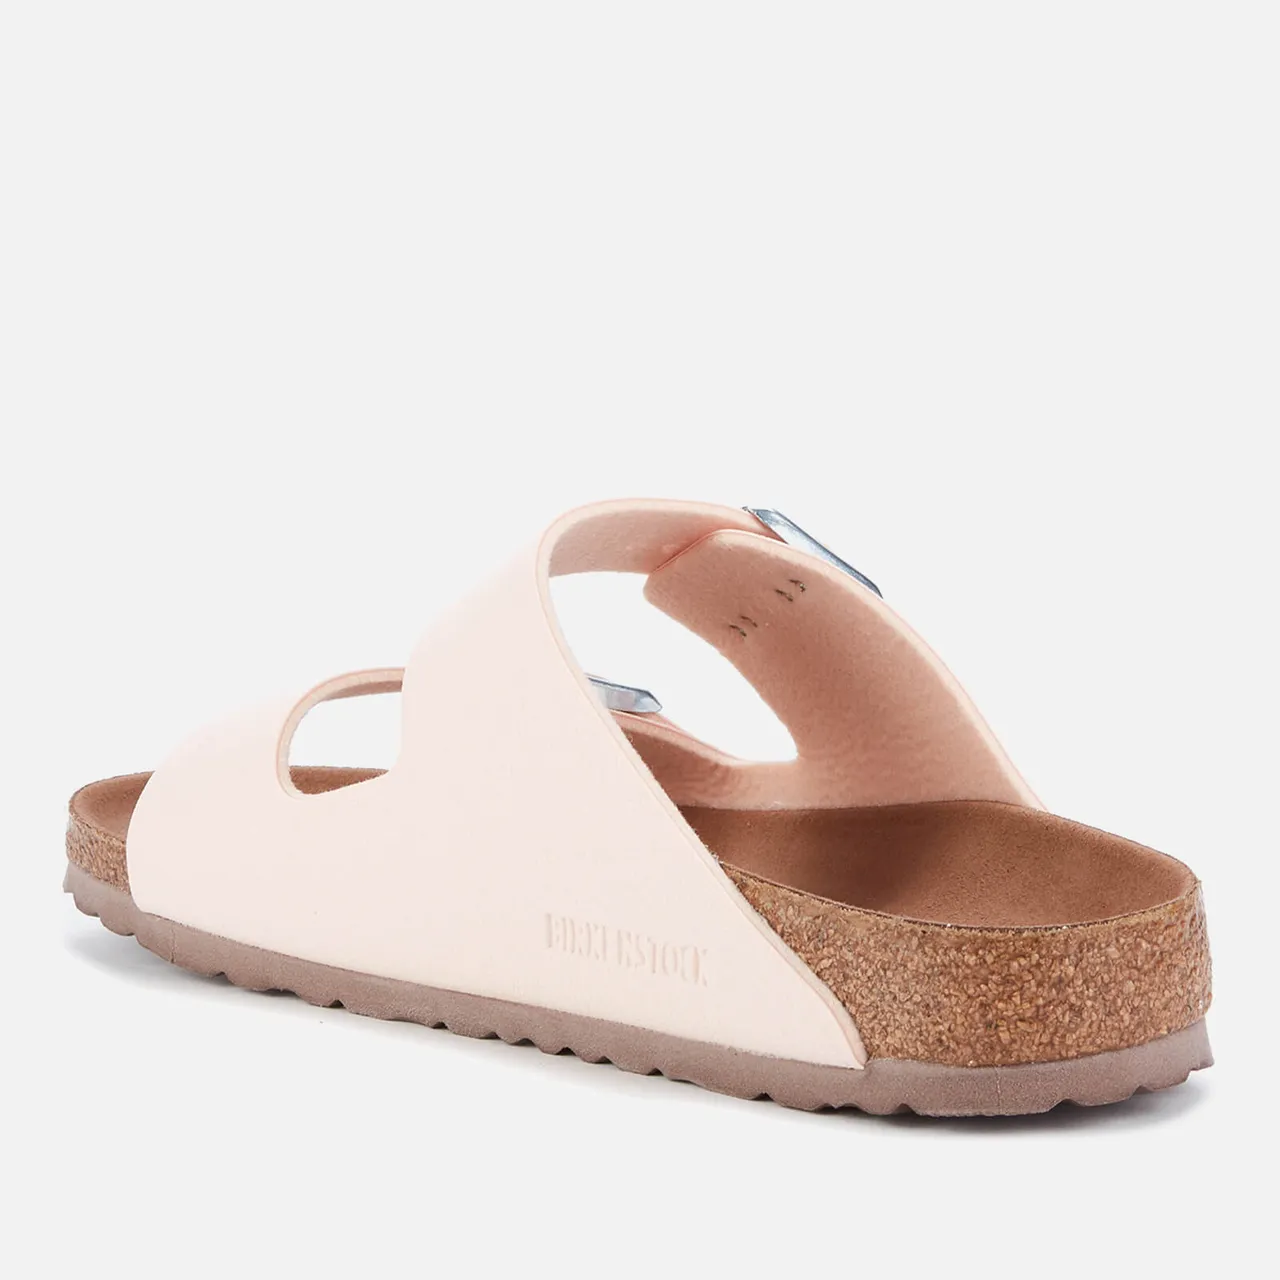 Birkenstock Women's Vegan Arizona Slim FitDouble Strap Sandals - Light Rose - EU 36/UK